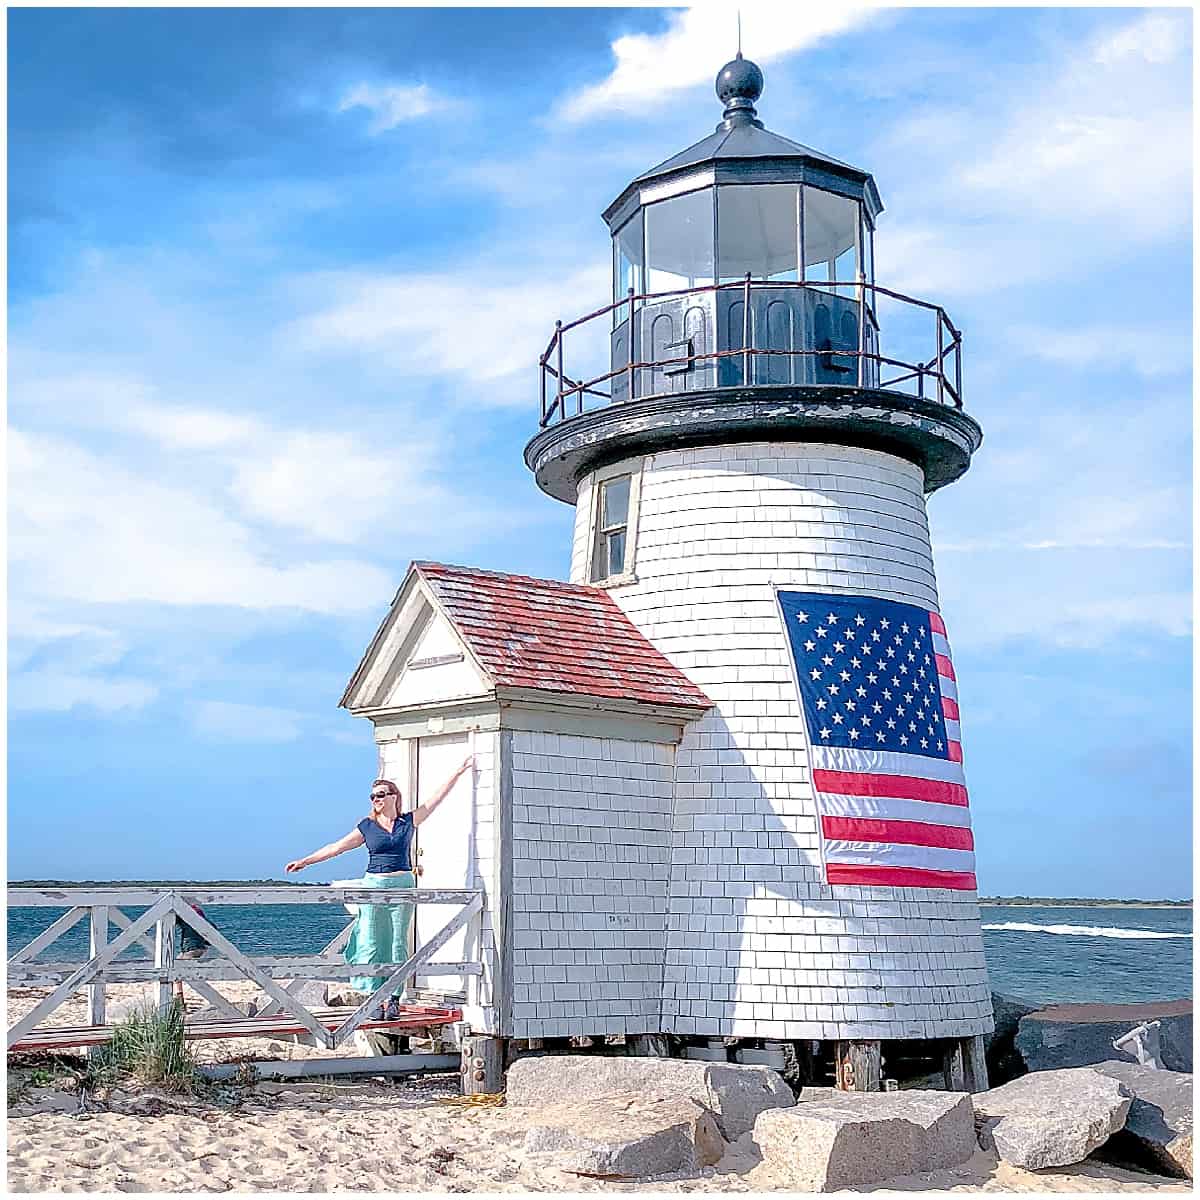 Things to do in Nantucket, Brant Point Lighthouse Nantucket Massachusetts